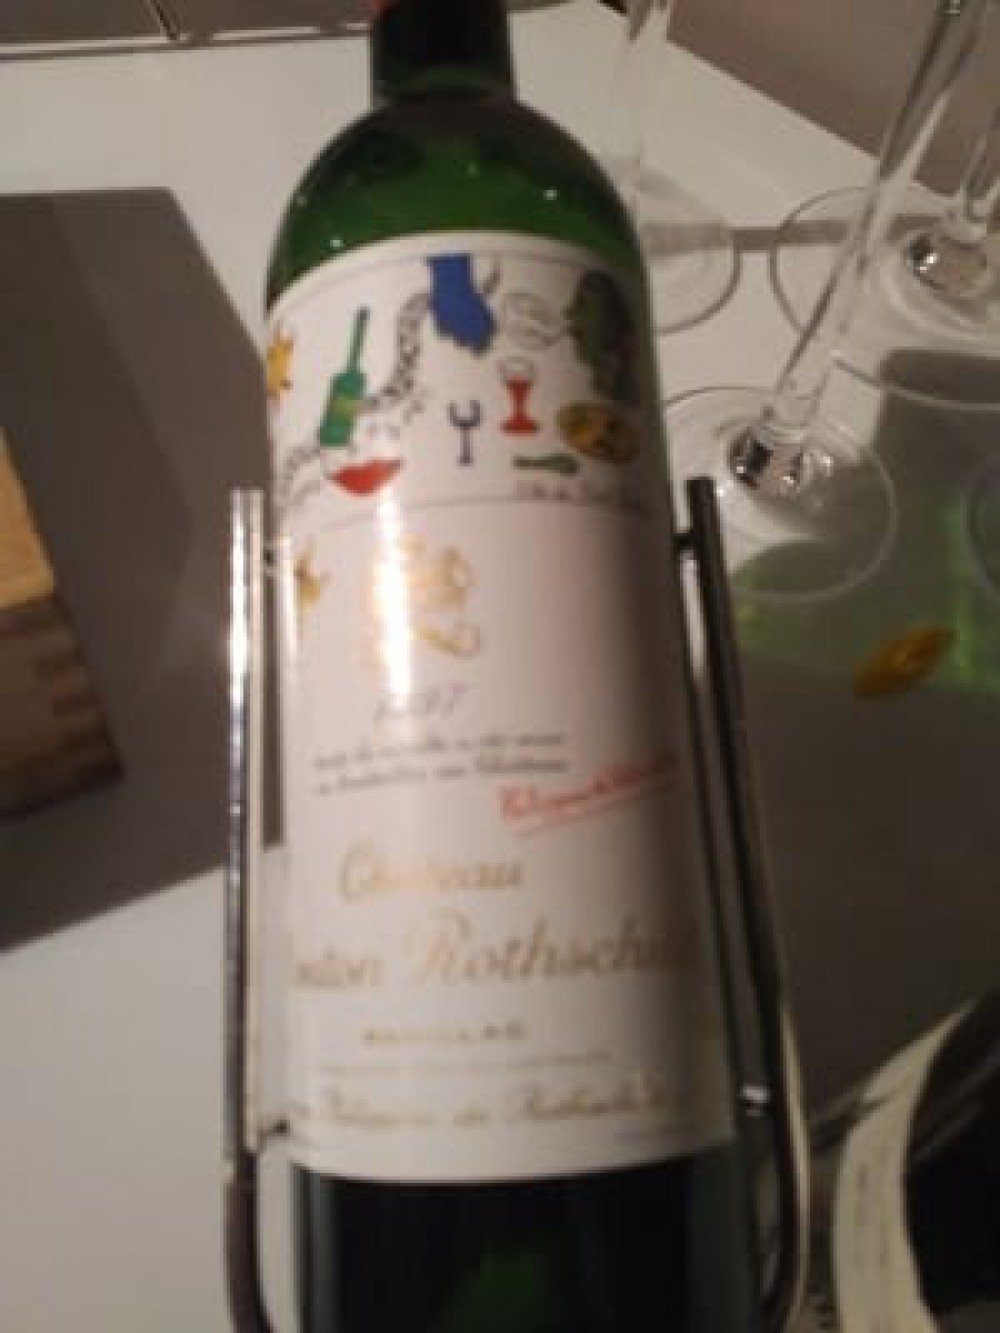 Classic Bordeaux 1997 - so nice